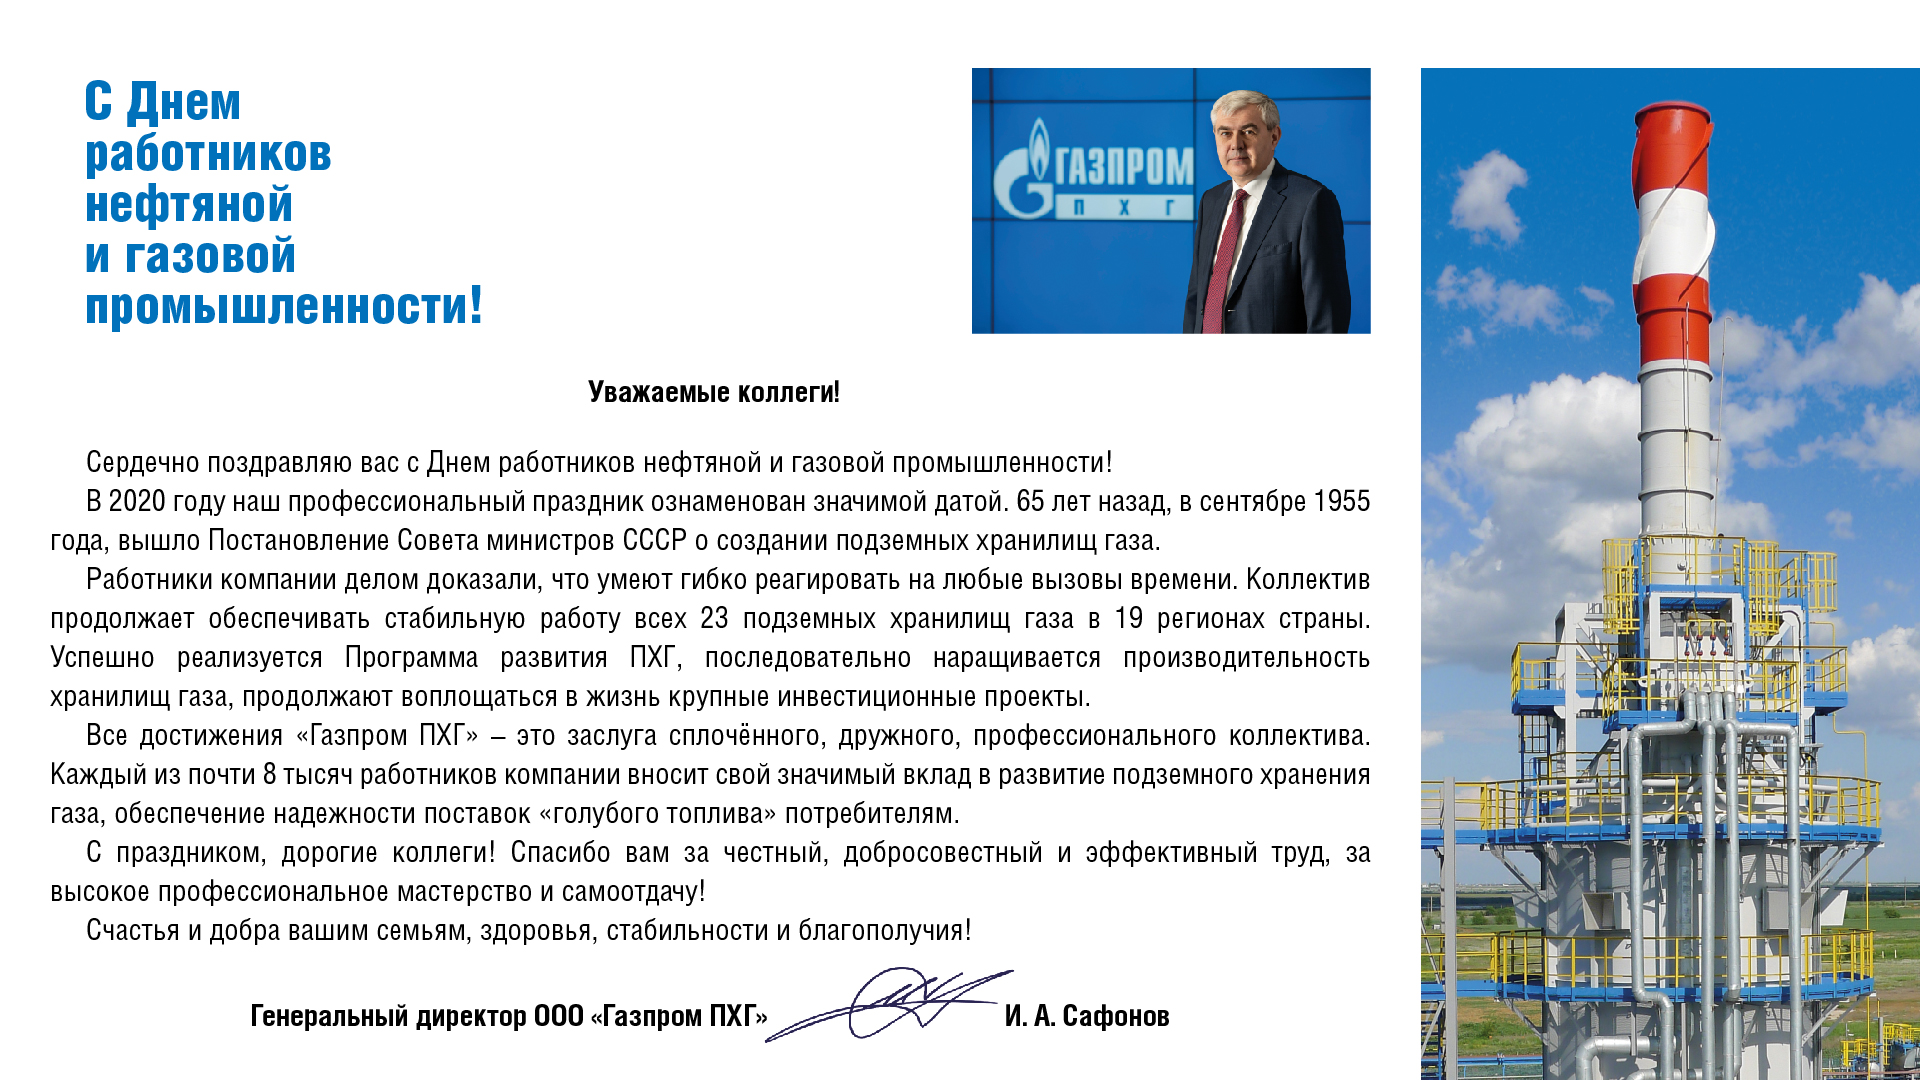 С днем работника Газпрома